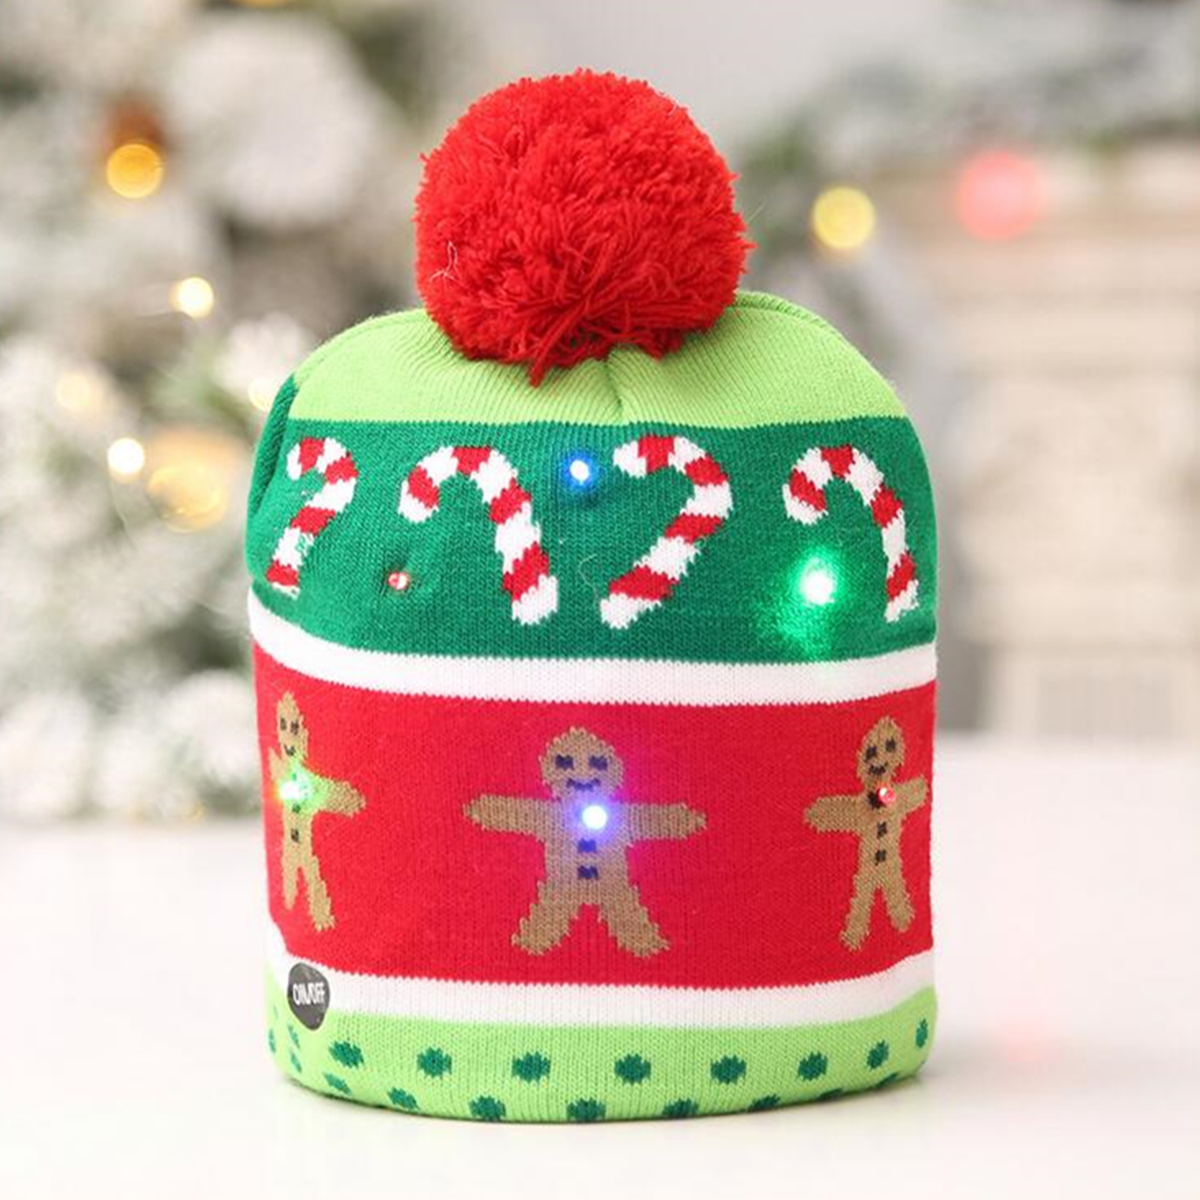 Christmas-LED-Light-Winter-Warm-Beanie-Cap-Santa-Claus-Snowflake-Knitted-Hat-1370284-11